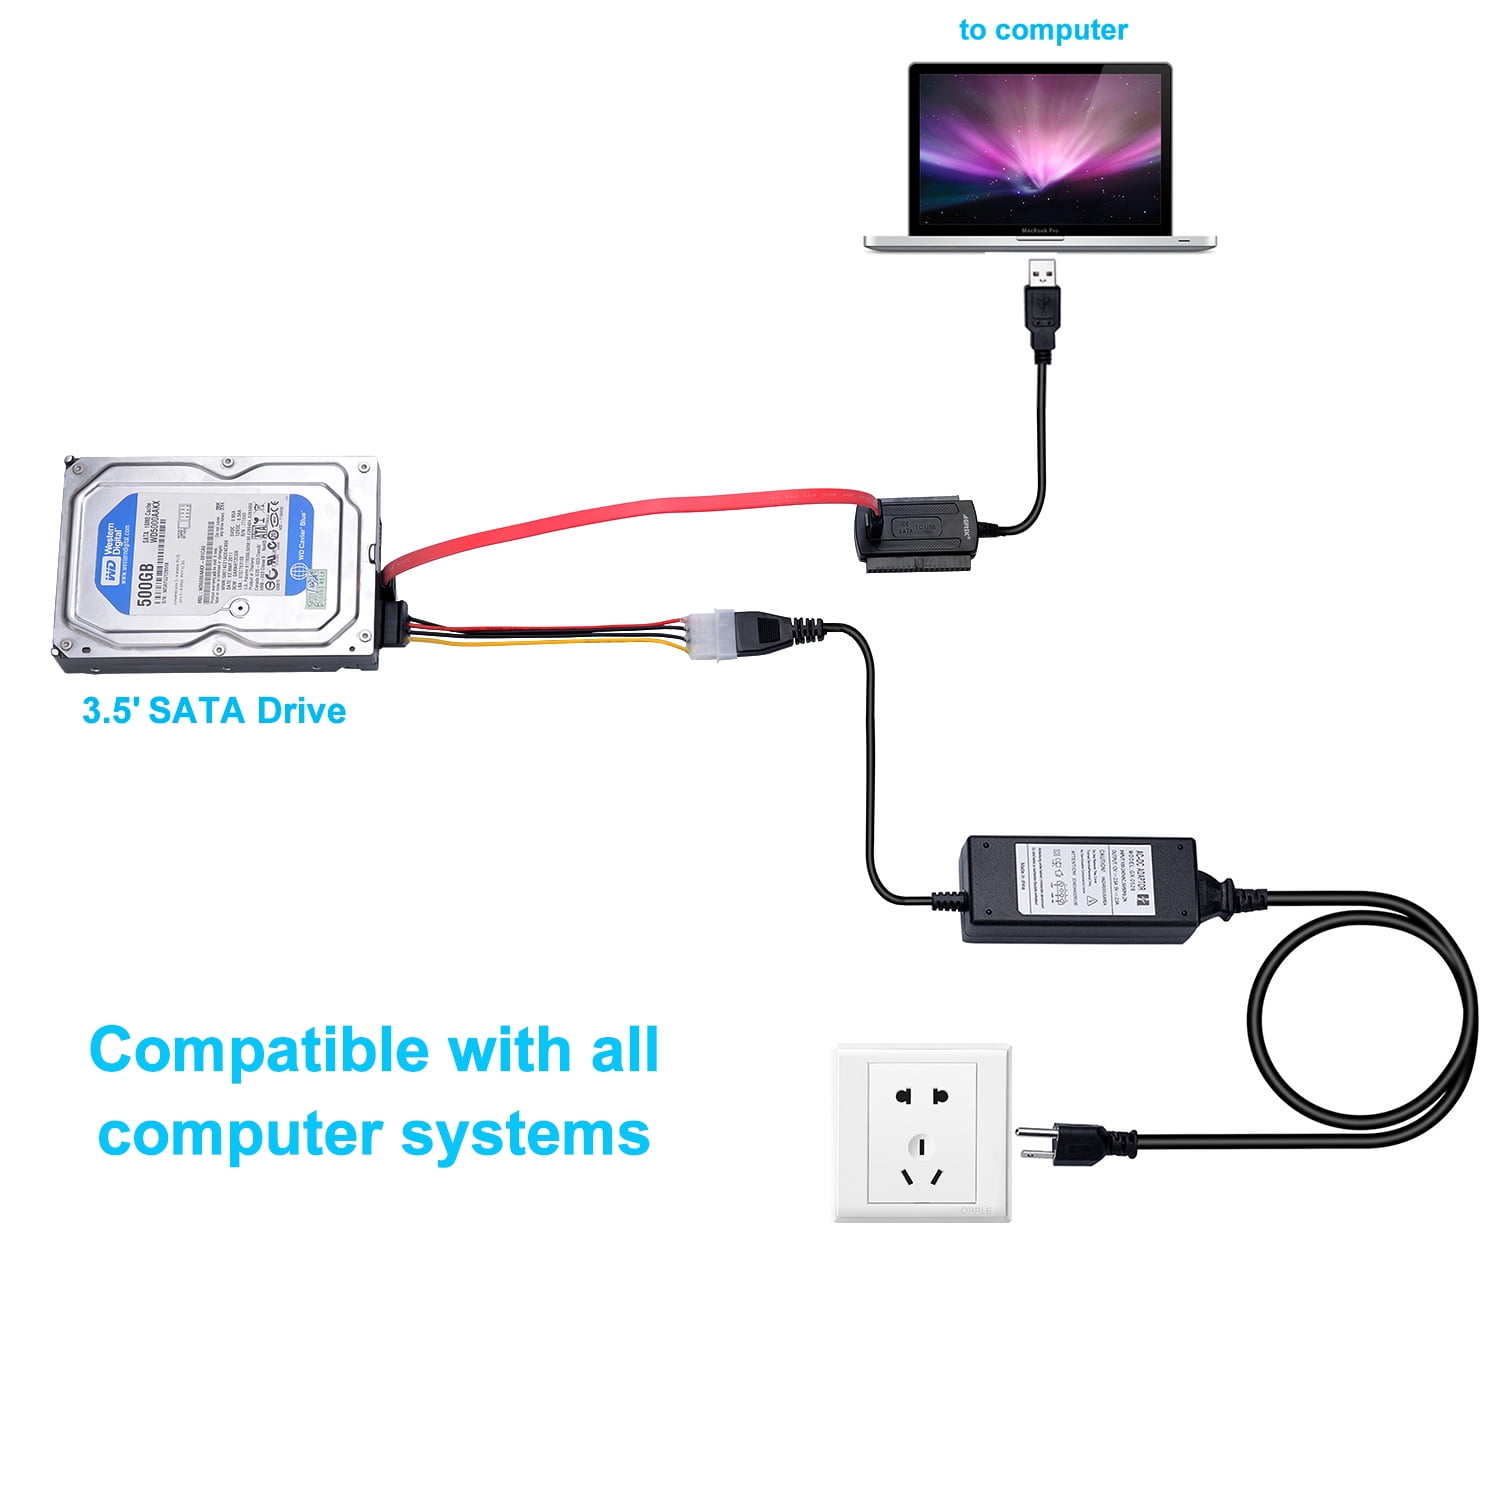 USB 2.0 to IDE SATA S-ATA 2.5 3.5 Hard Drive HD HDD Converter Adapter Cable New